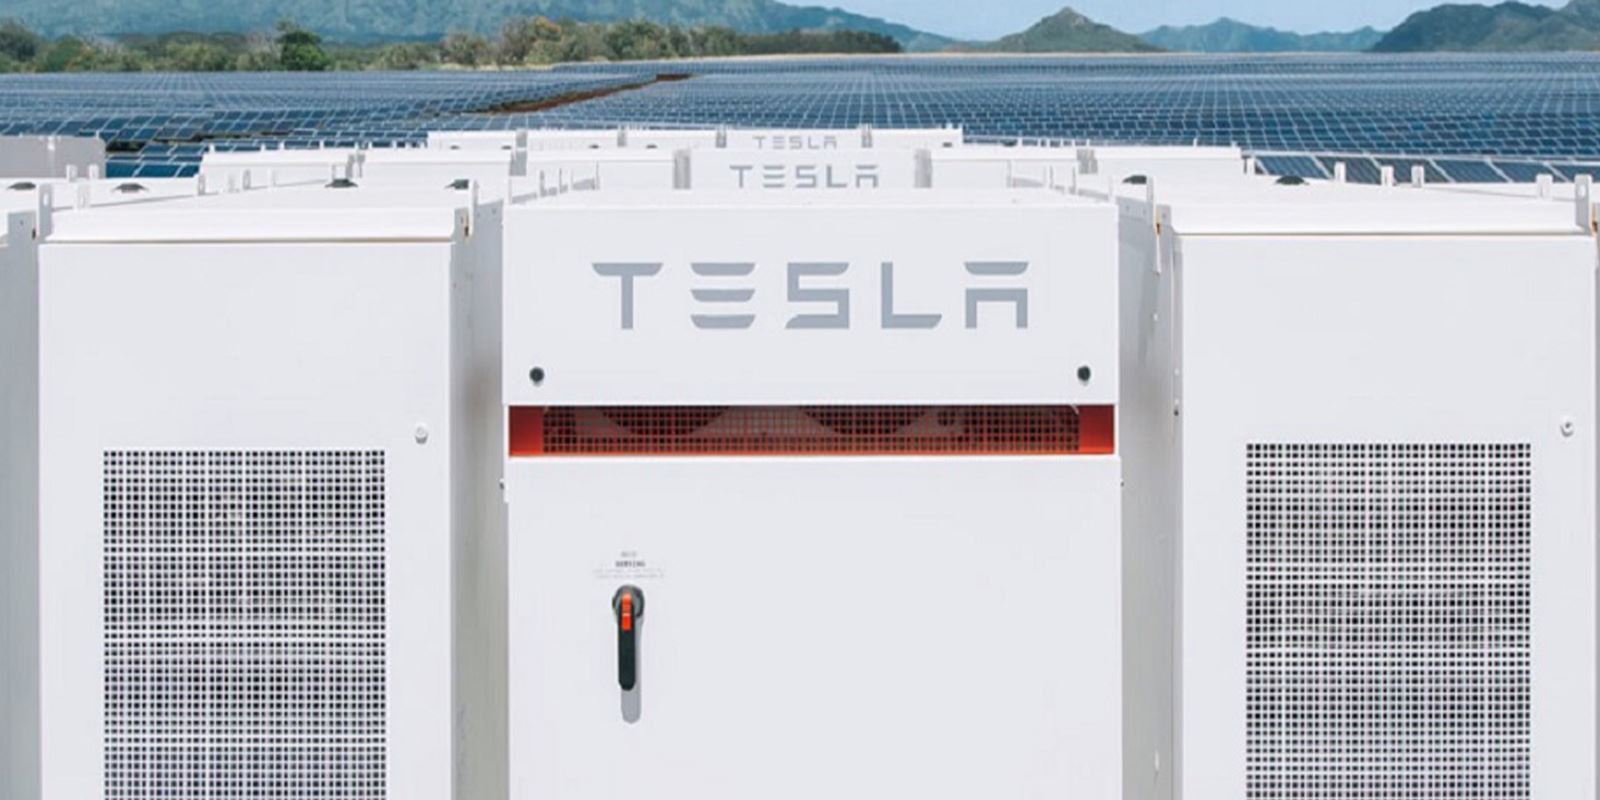 Tesla commercial energy storage system